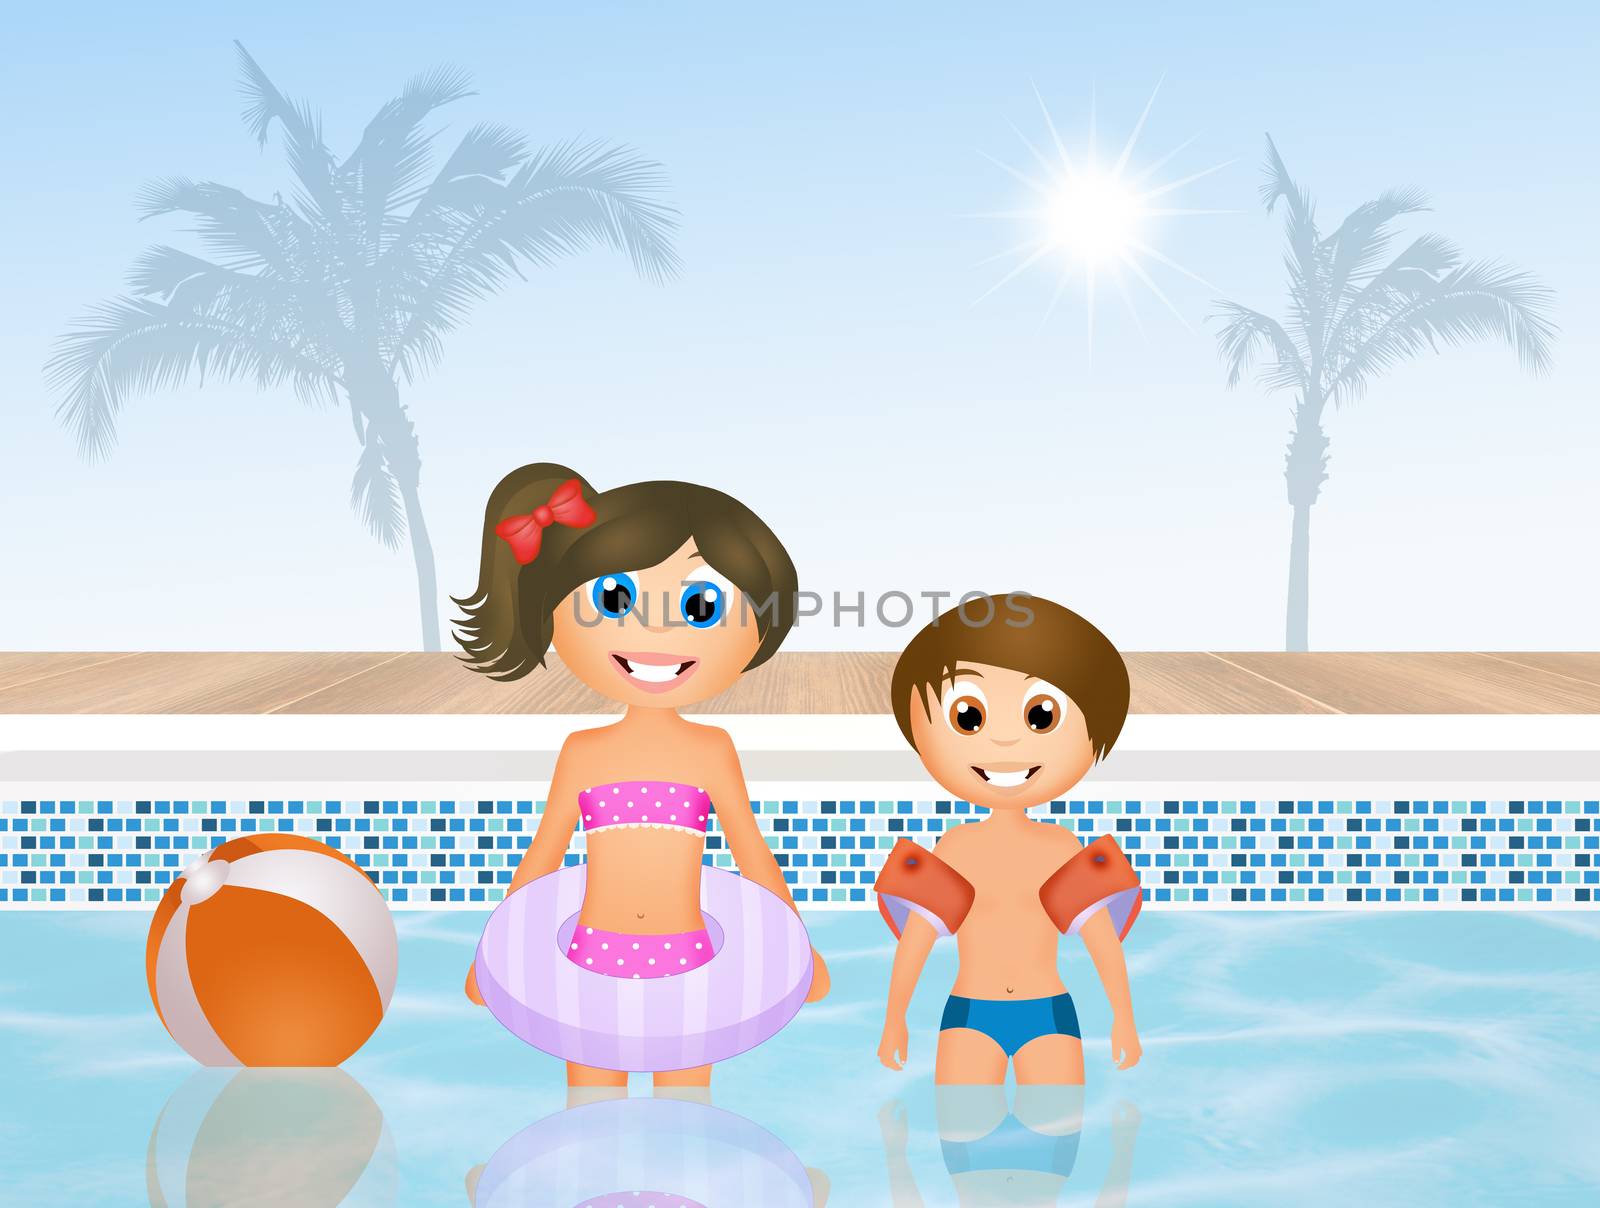 illustration of children in swimming pool